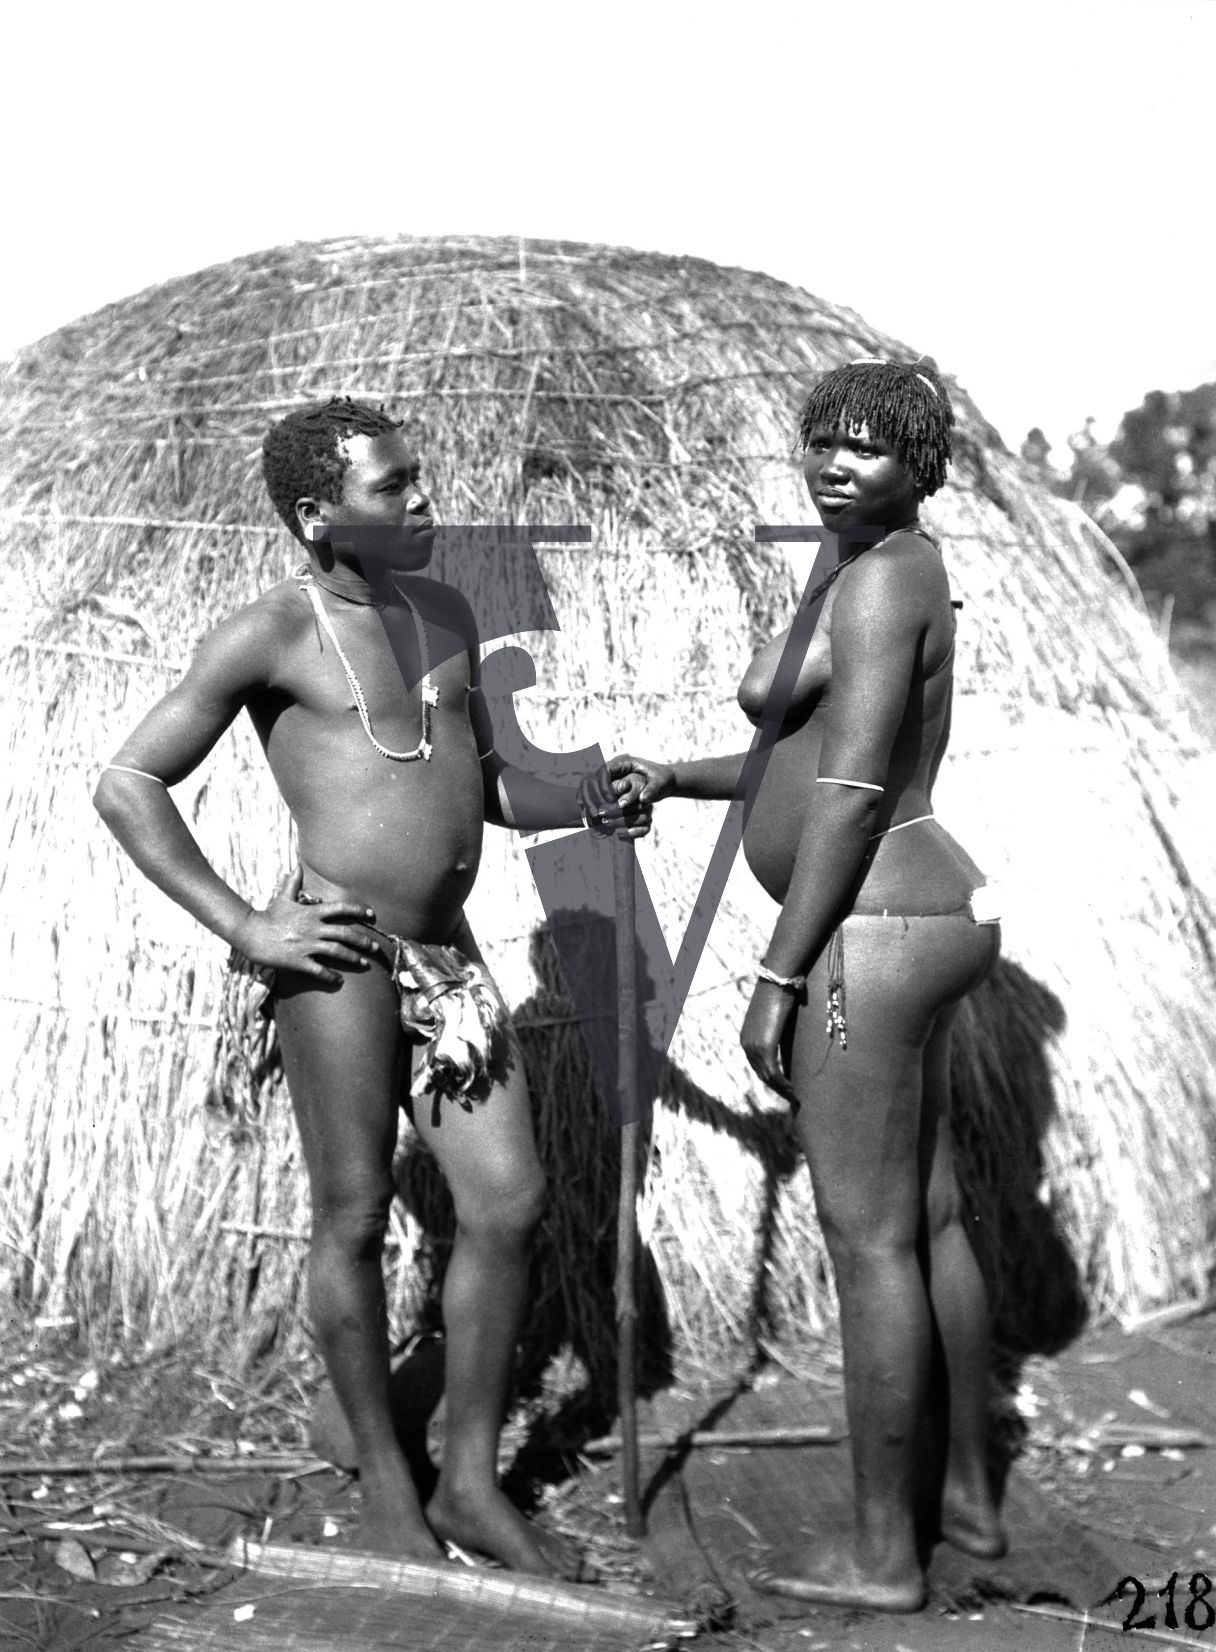 Siliva the Zulu, Production still, Zulu naked couple.